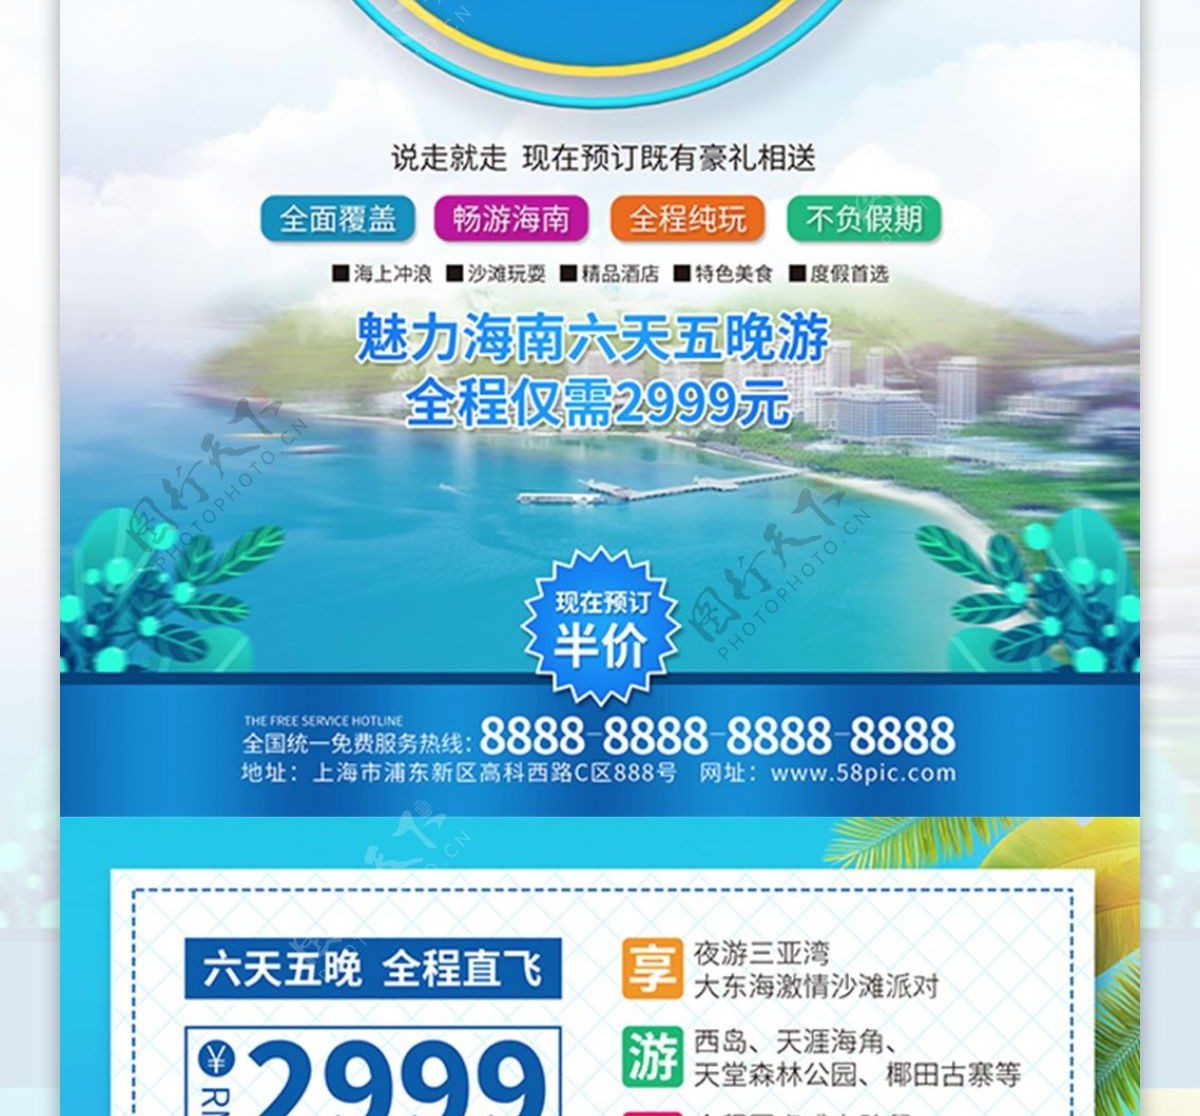 C4D立体字畅游海南旅游宣传单